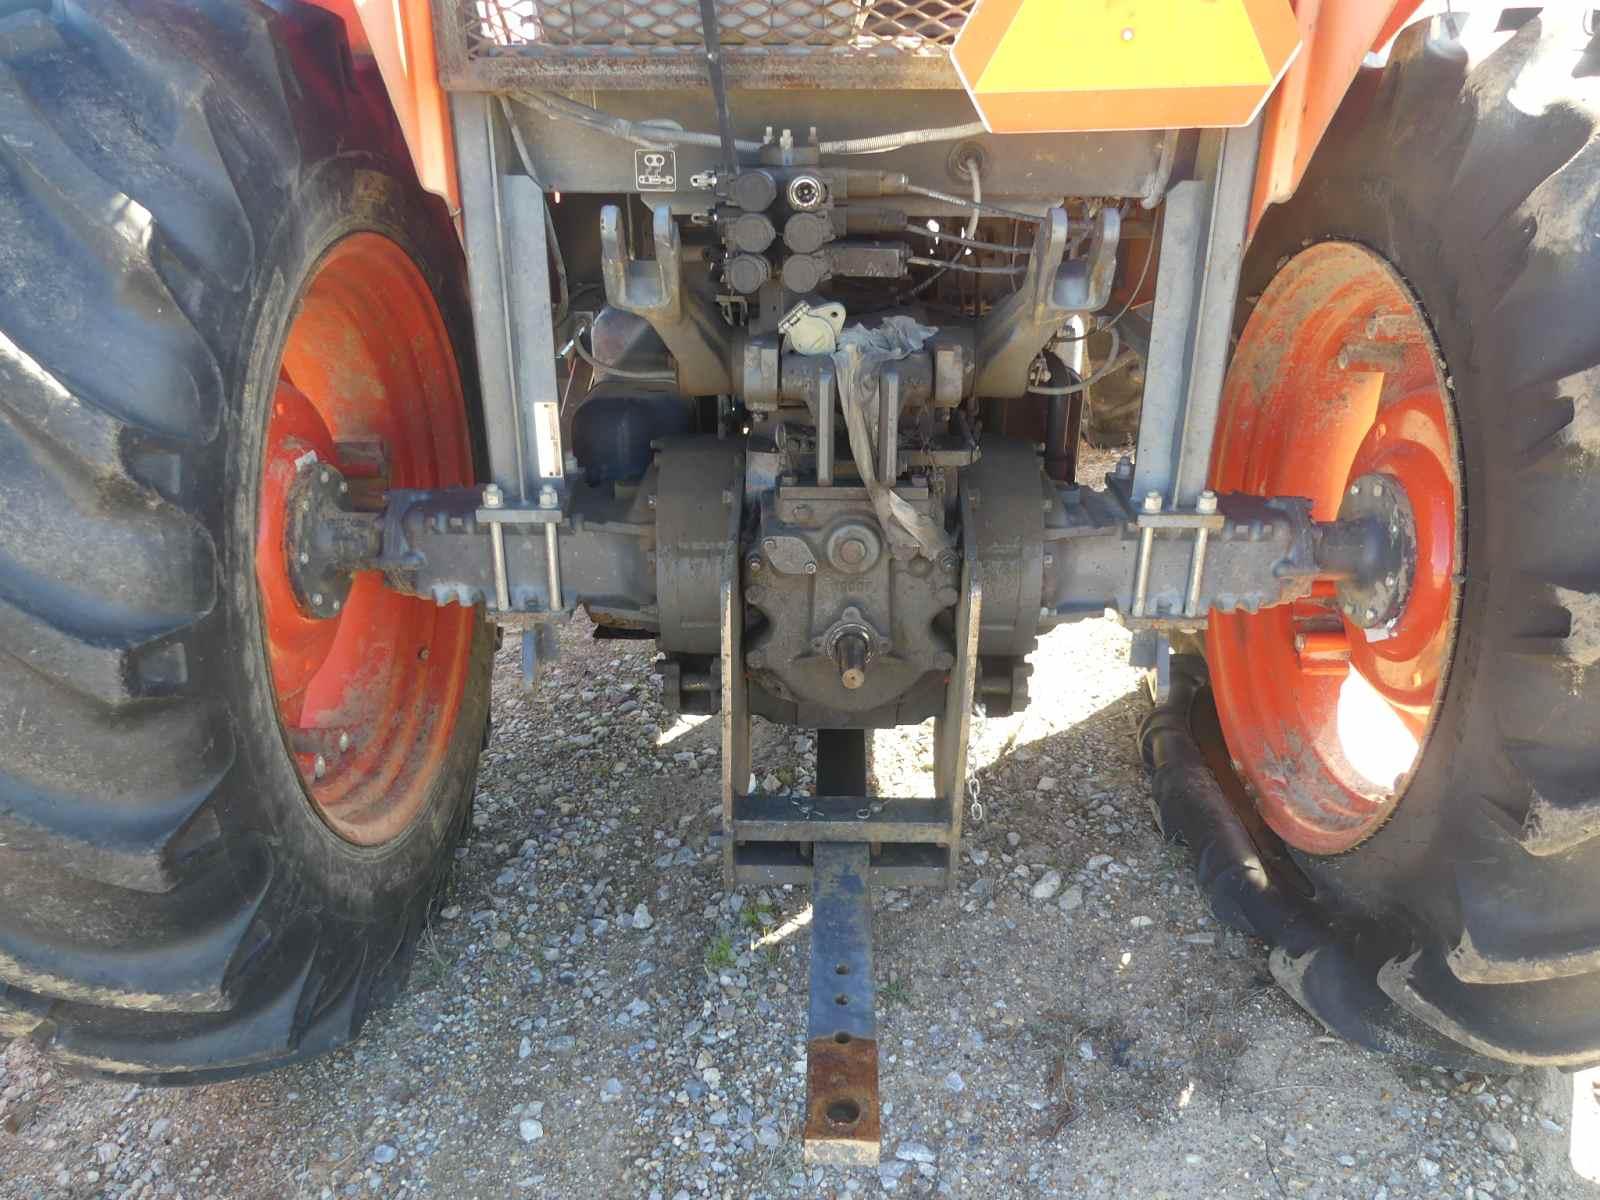 2013 Kubota M108S Tractor, s/n 73535 (Salvage): Sweeps